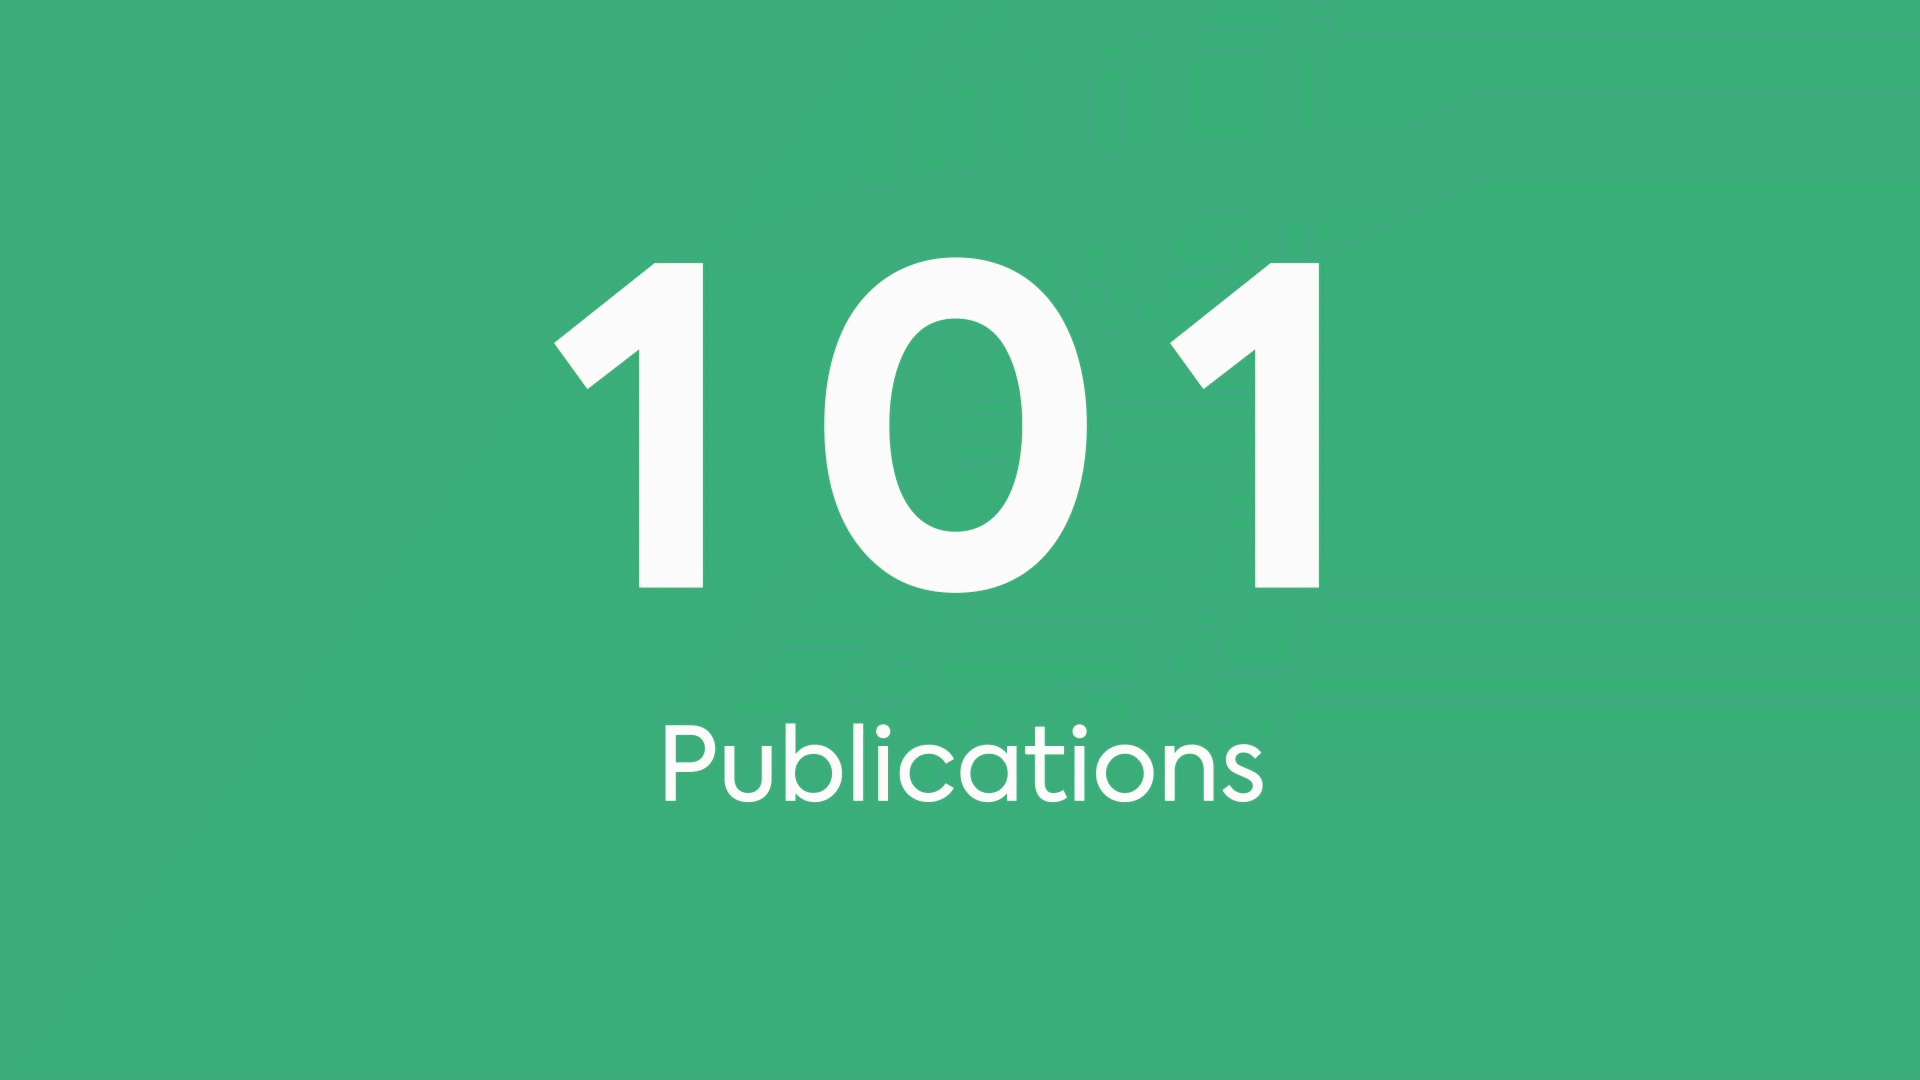 200 publications